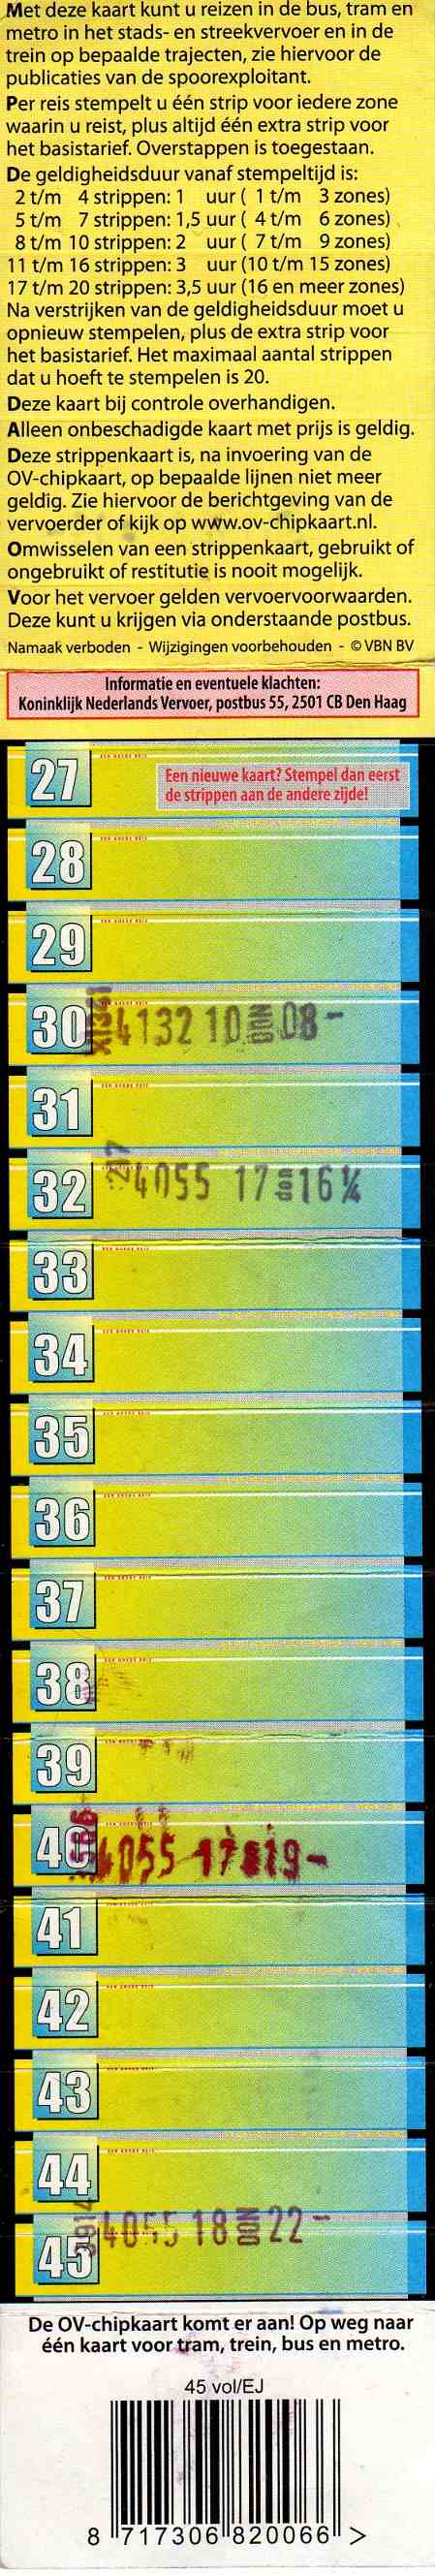 45-strip ticket (back)